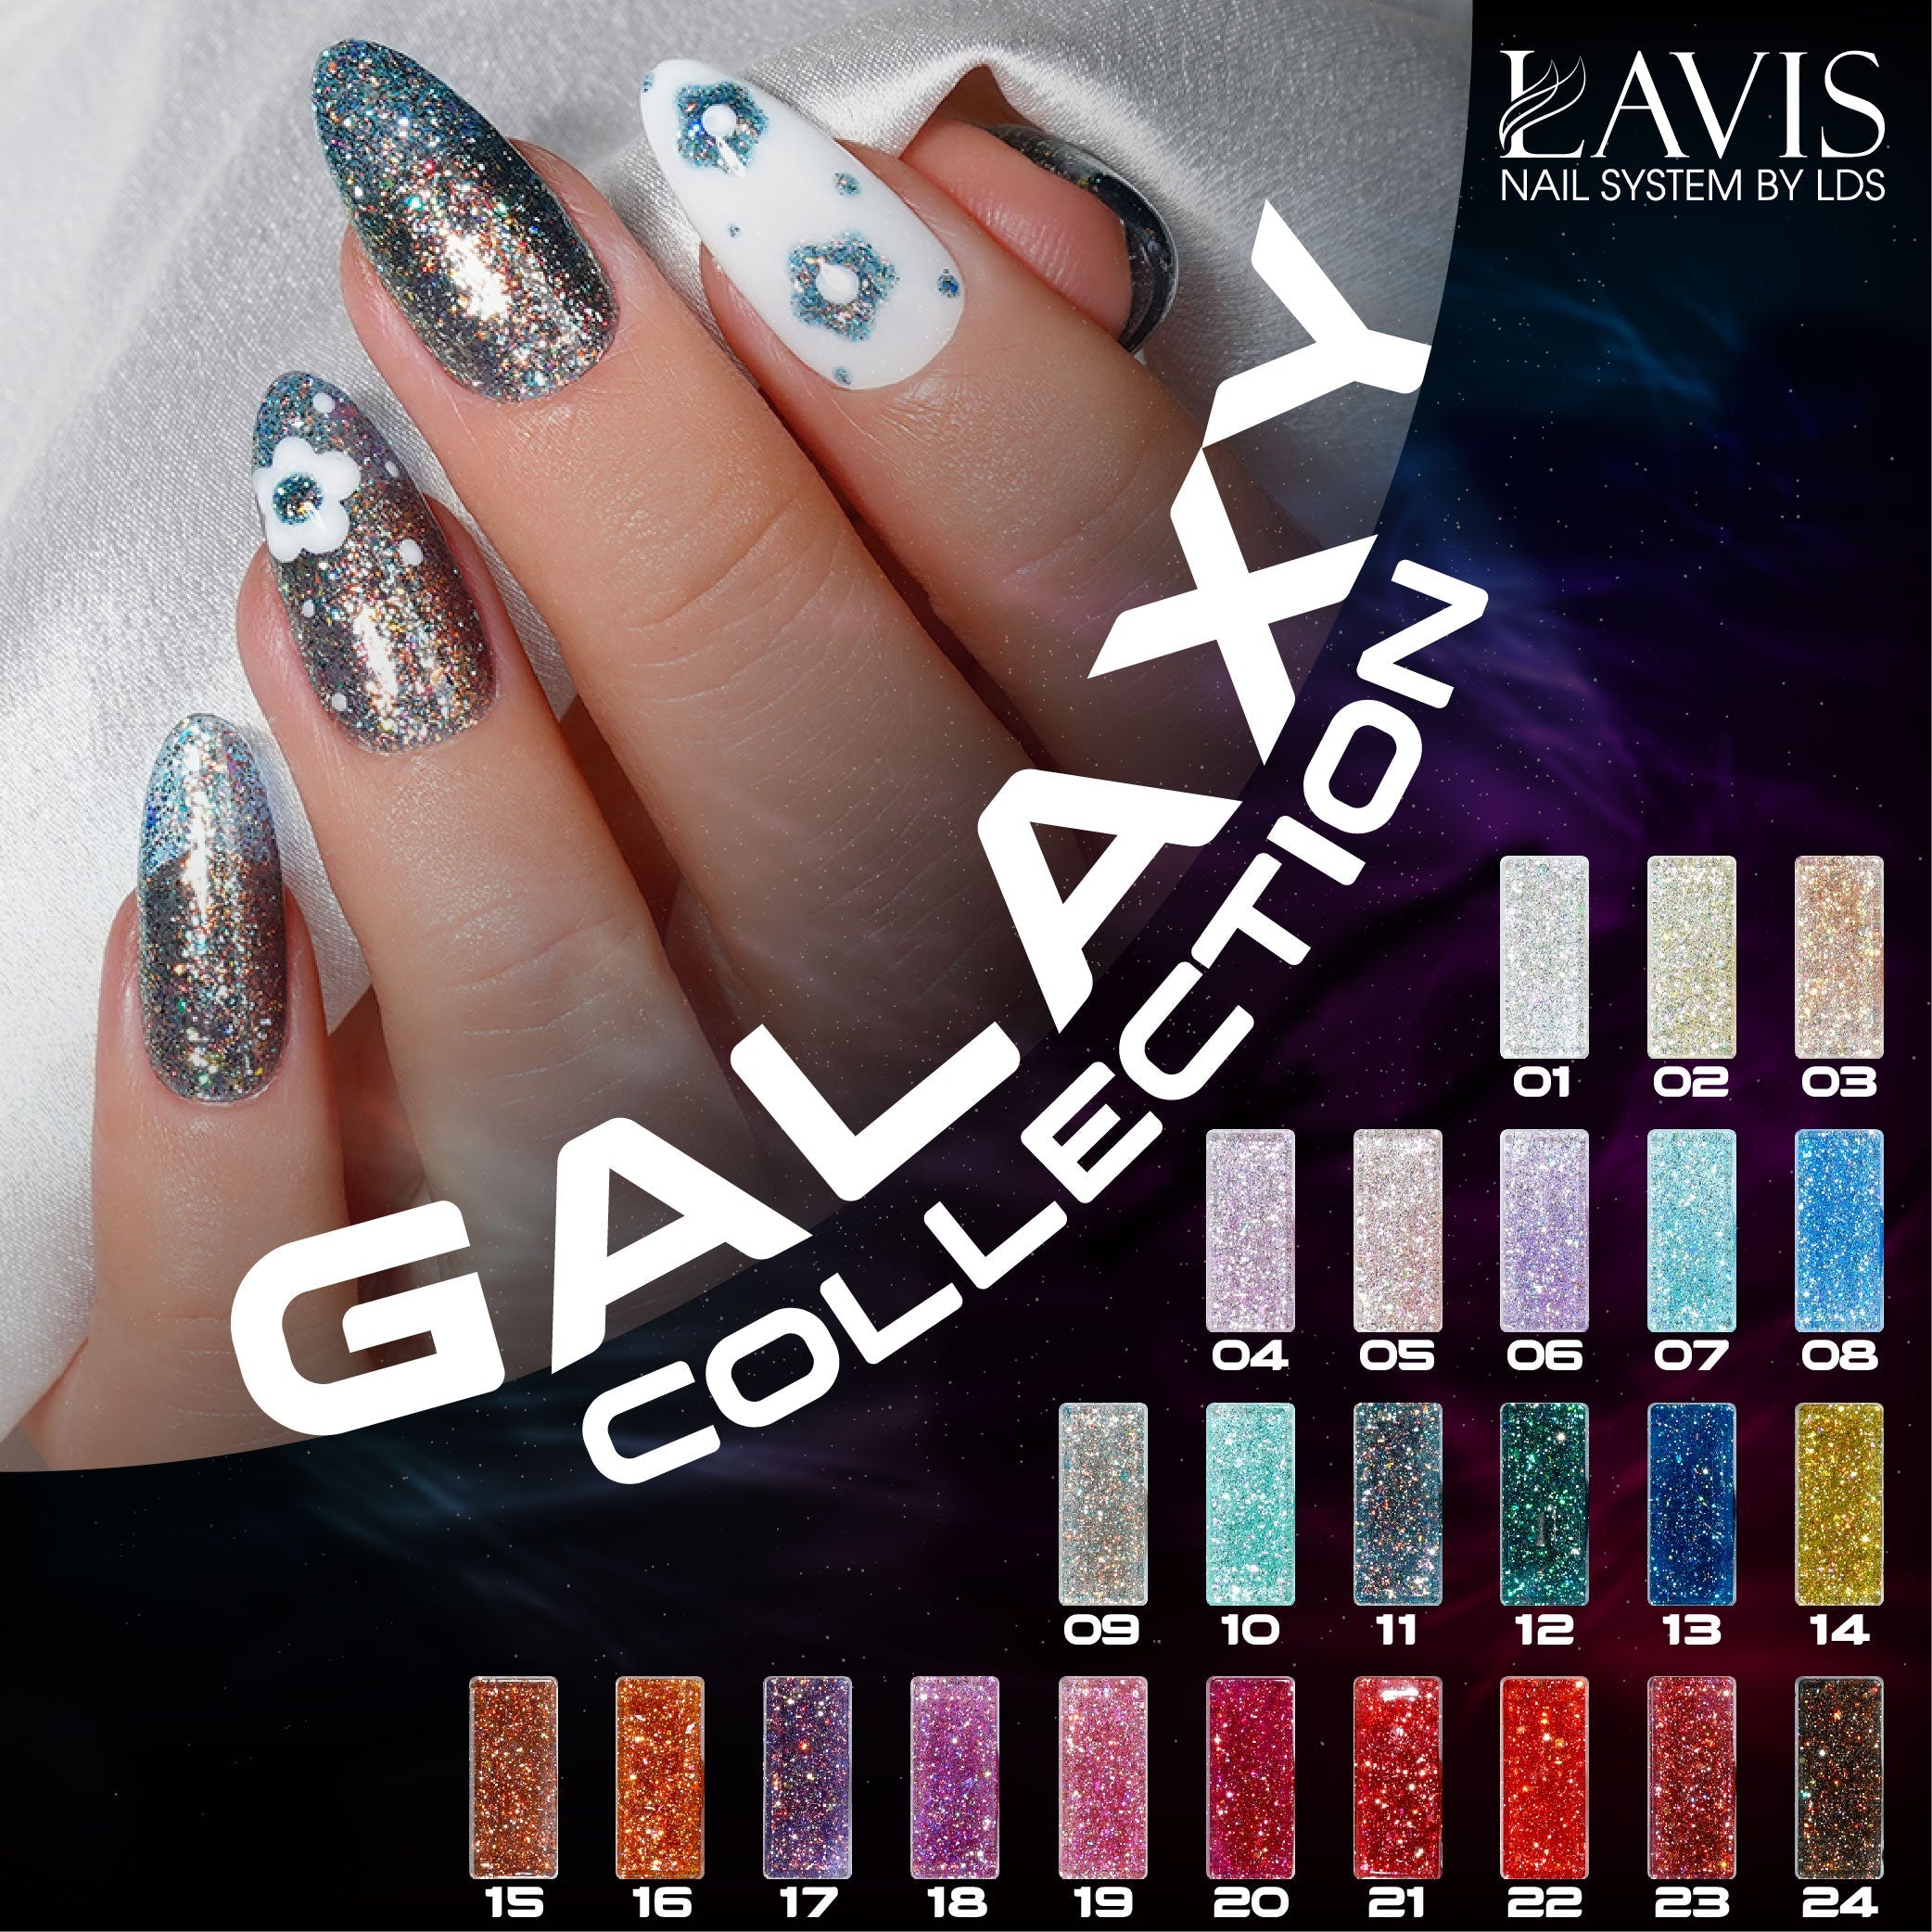 LAVIS Glitter G01 - 12 - Gel Polish 0.5 oz - Galaxy Collection